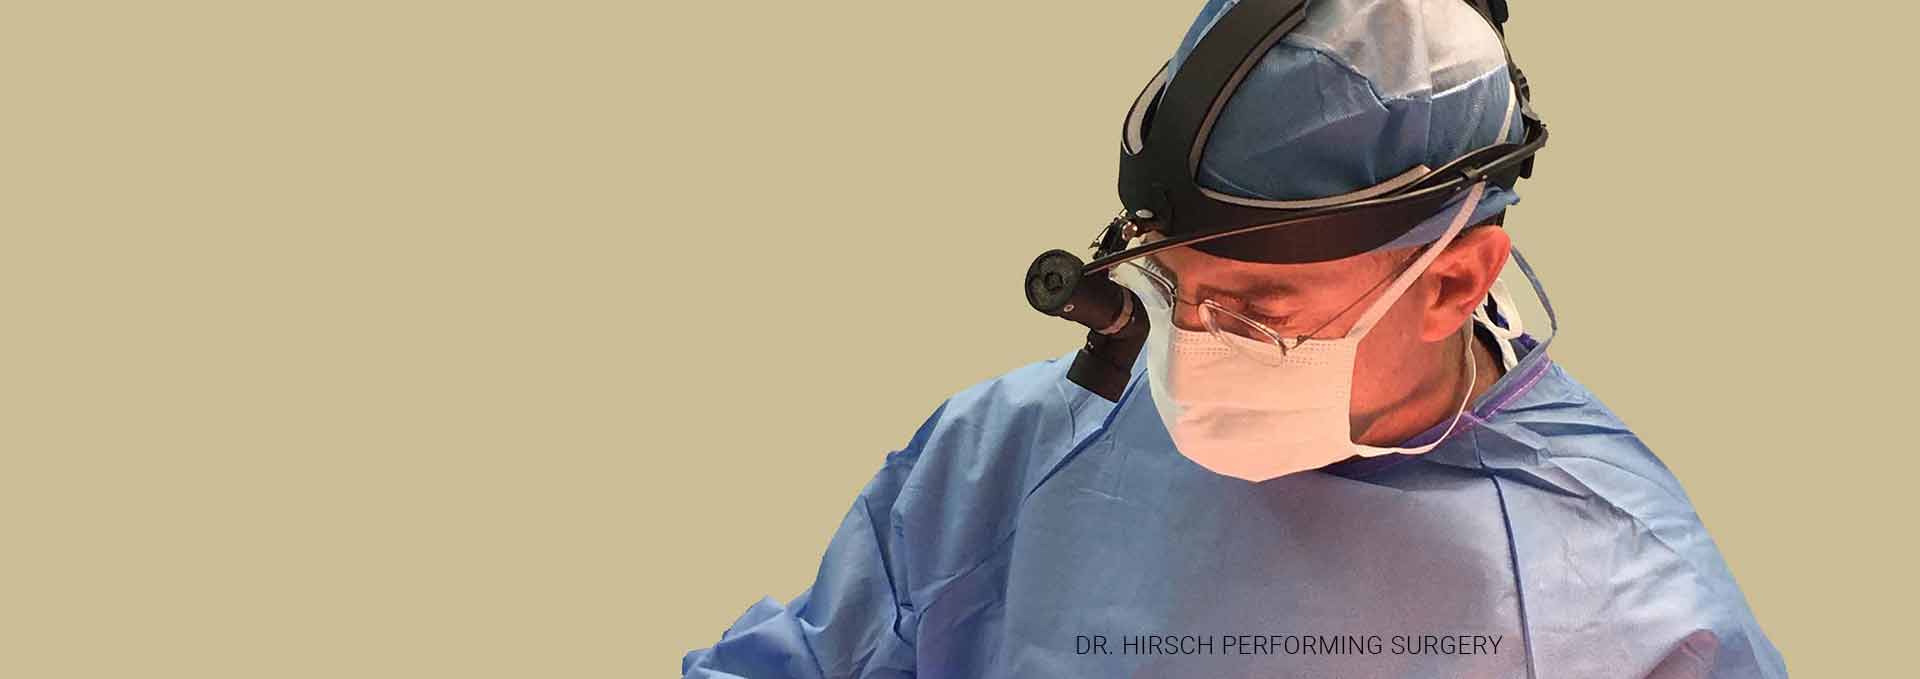 Dr. Hirsch plastic surgery